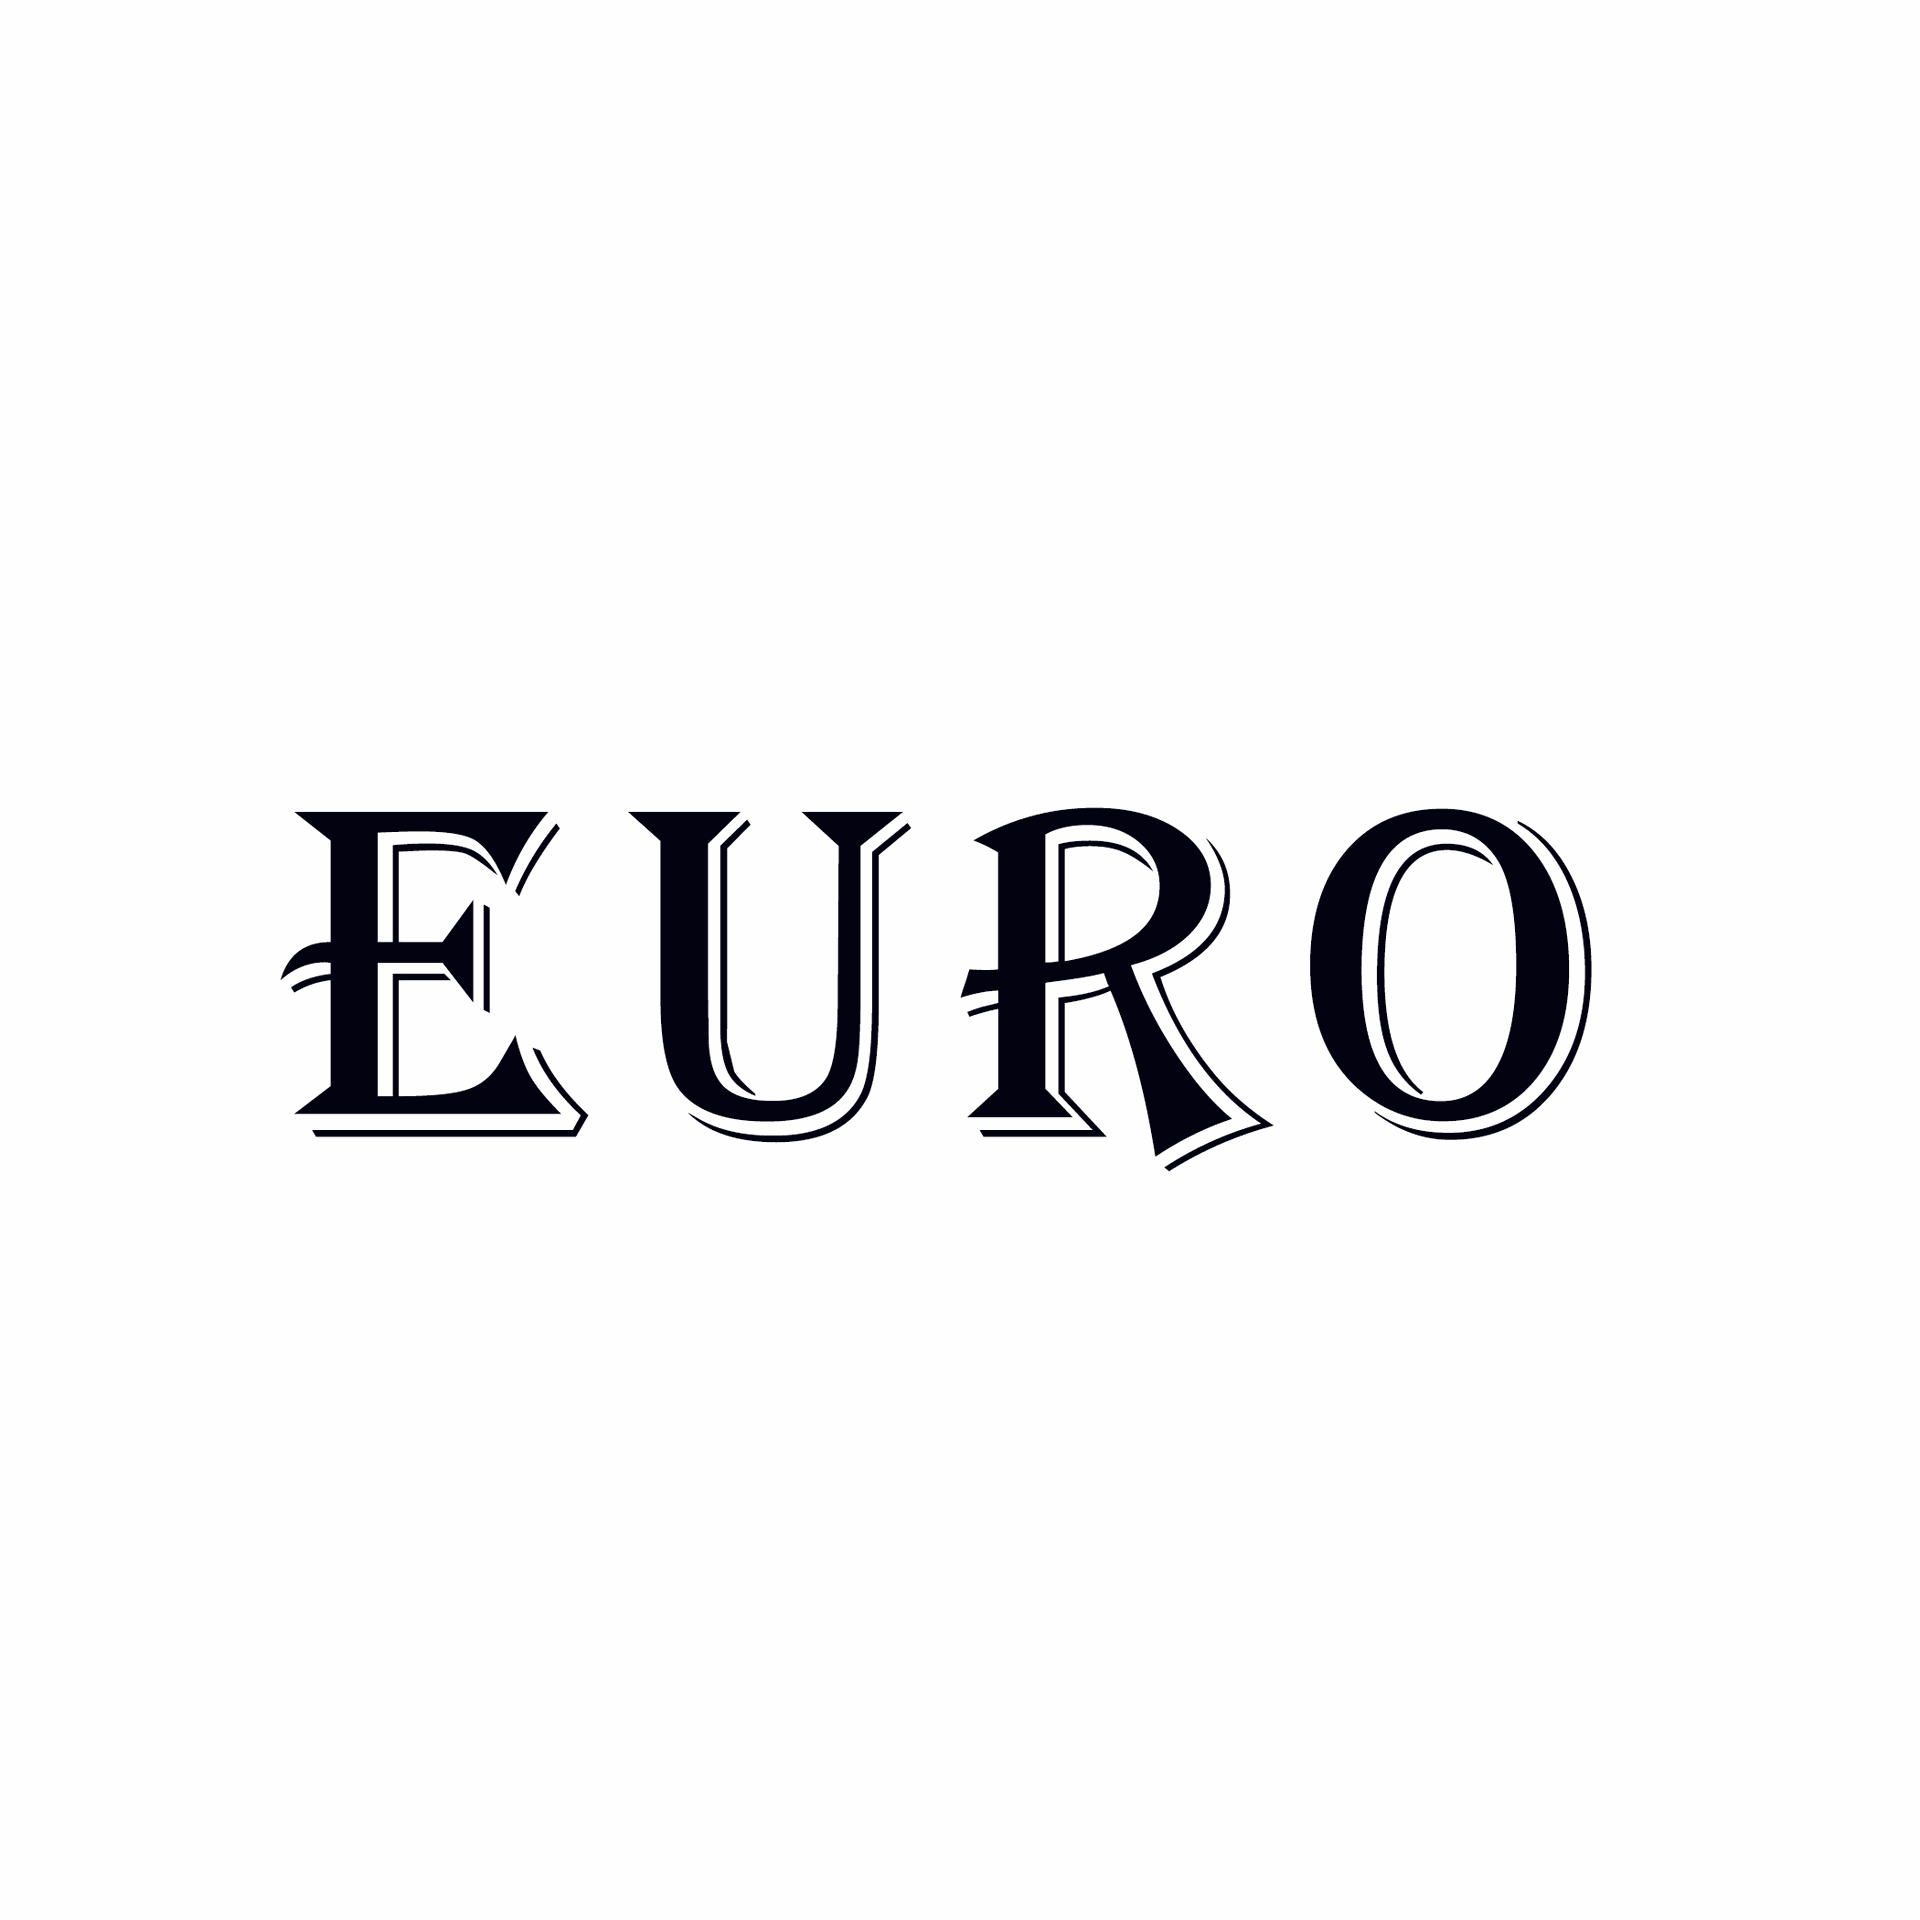 Brand: EURO